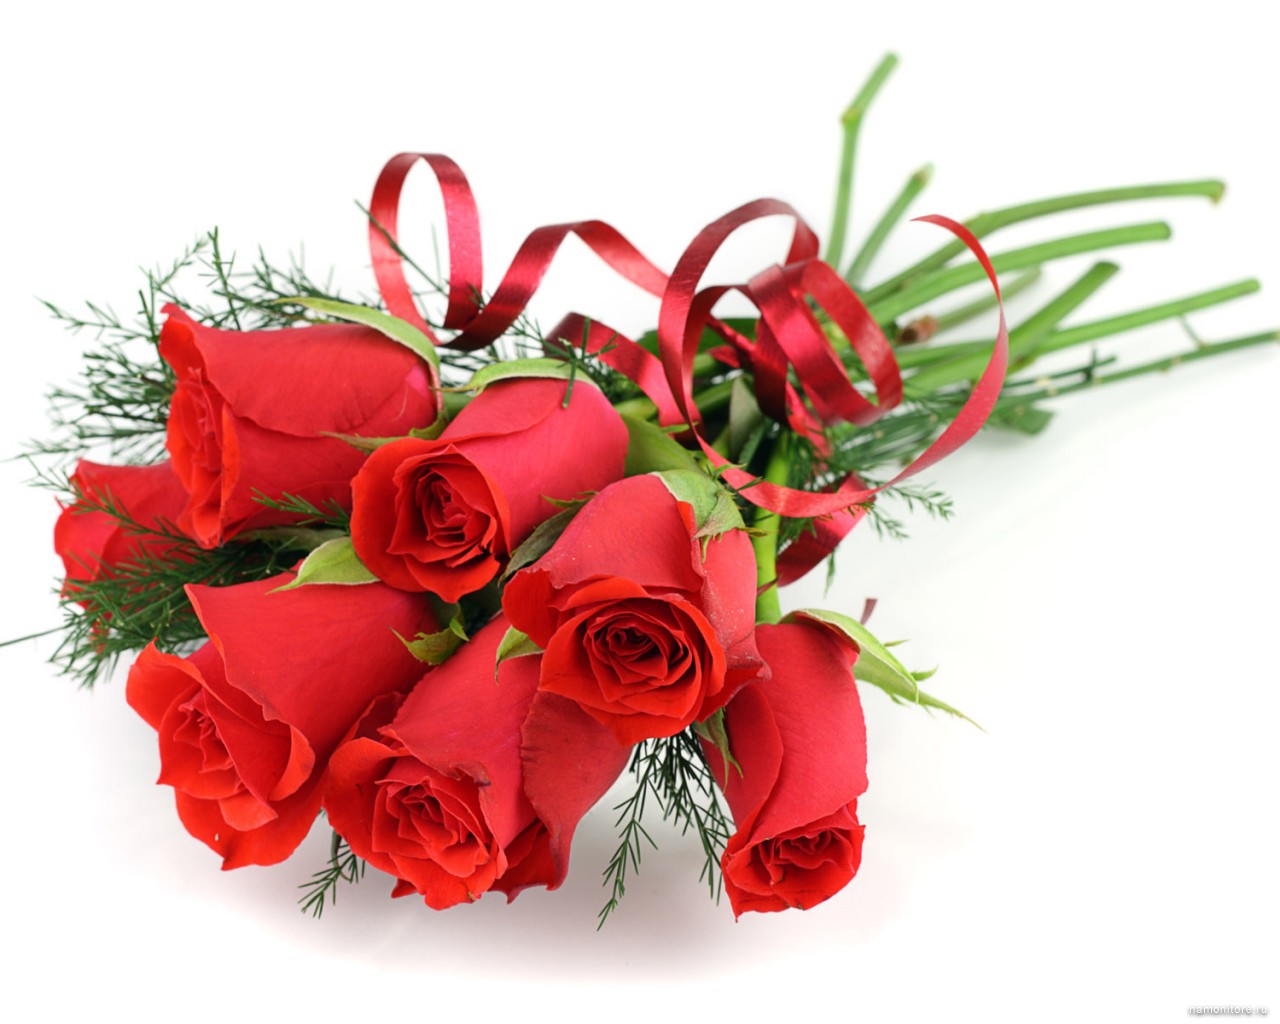 Drawn Red Rose Guldasta - Bouquet Flowers - HD Wallpaper 